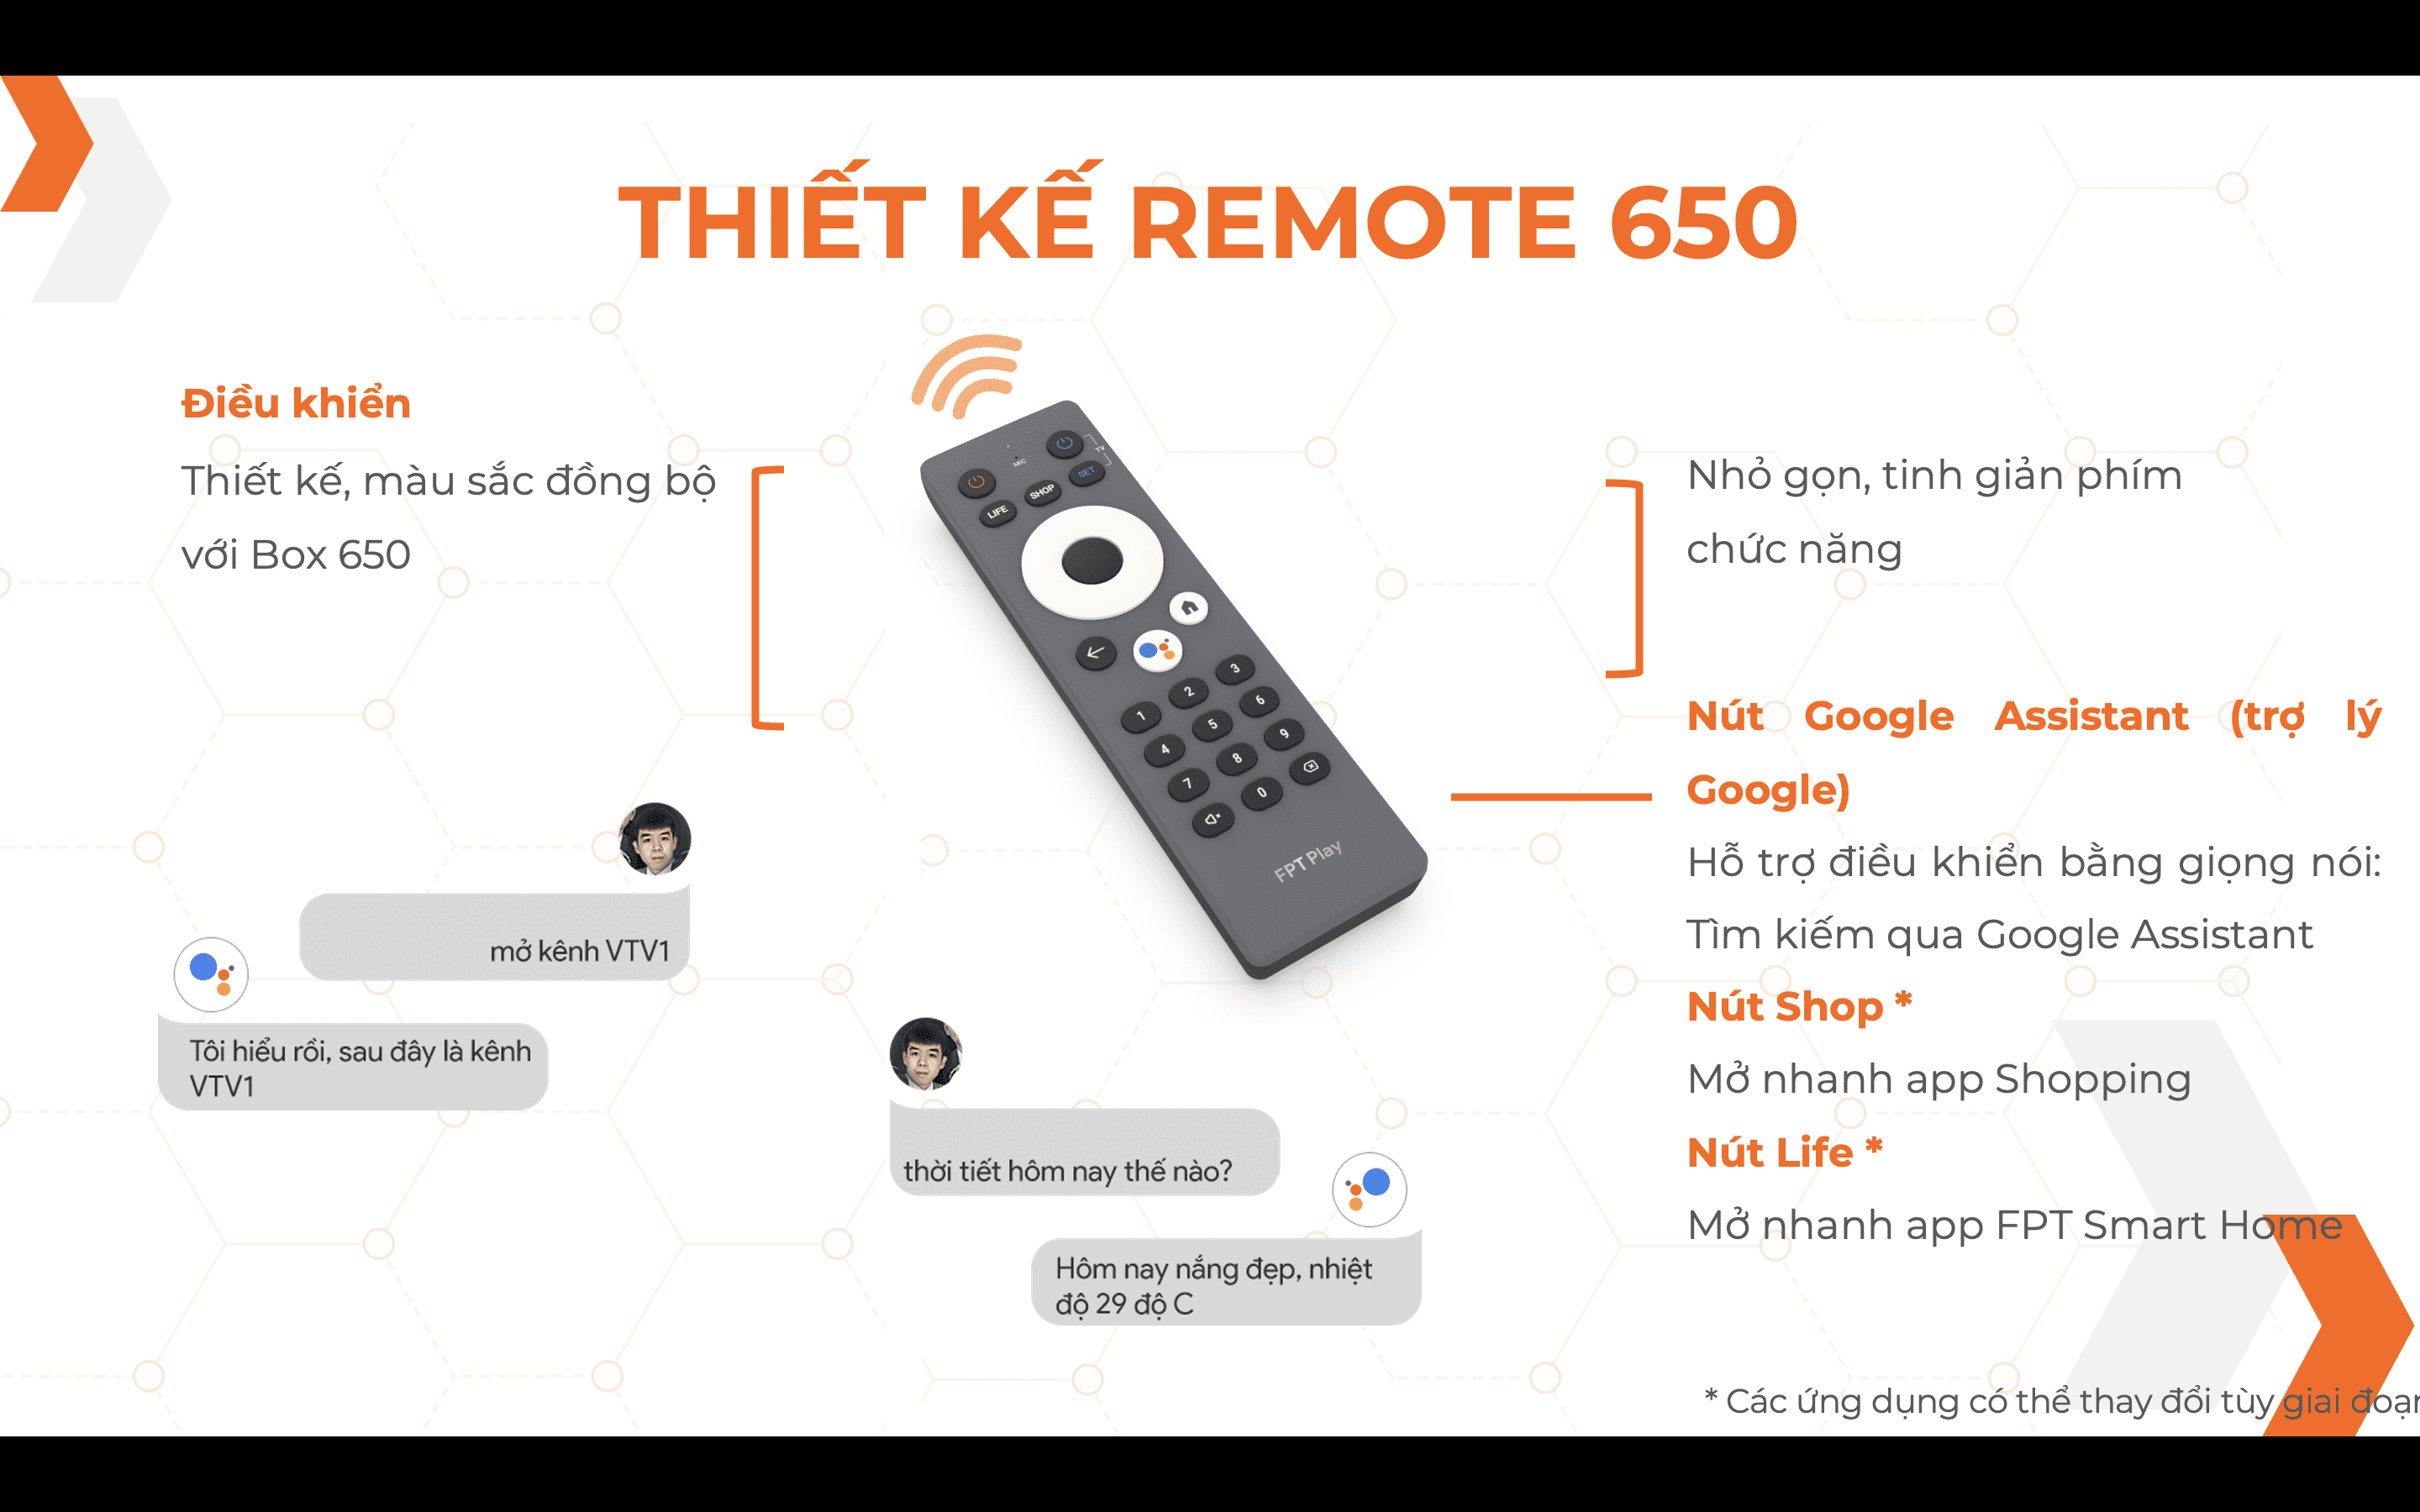 Thiết kế remote 650